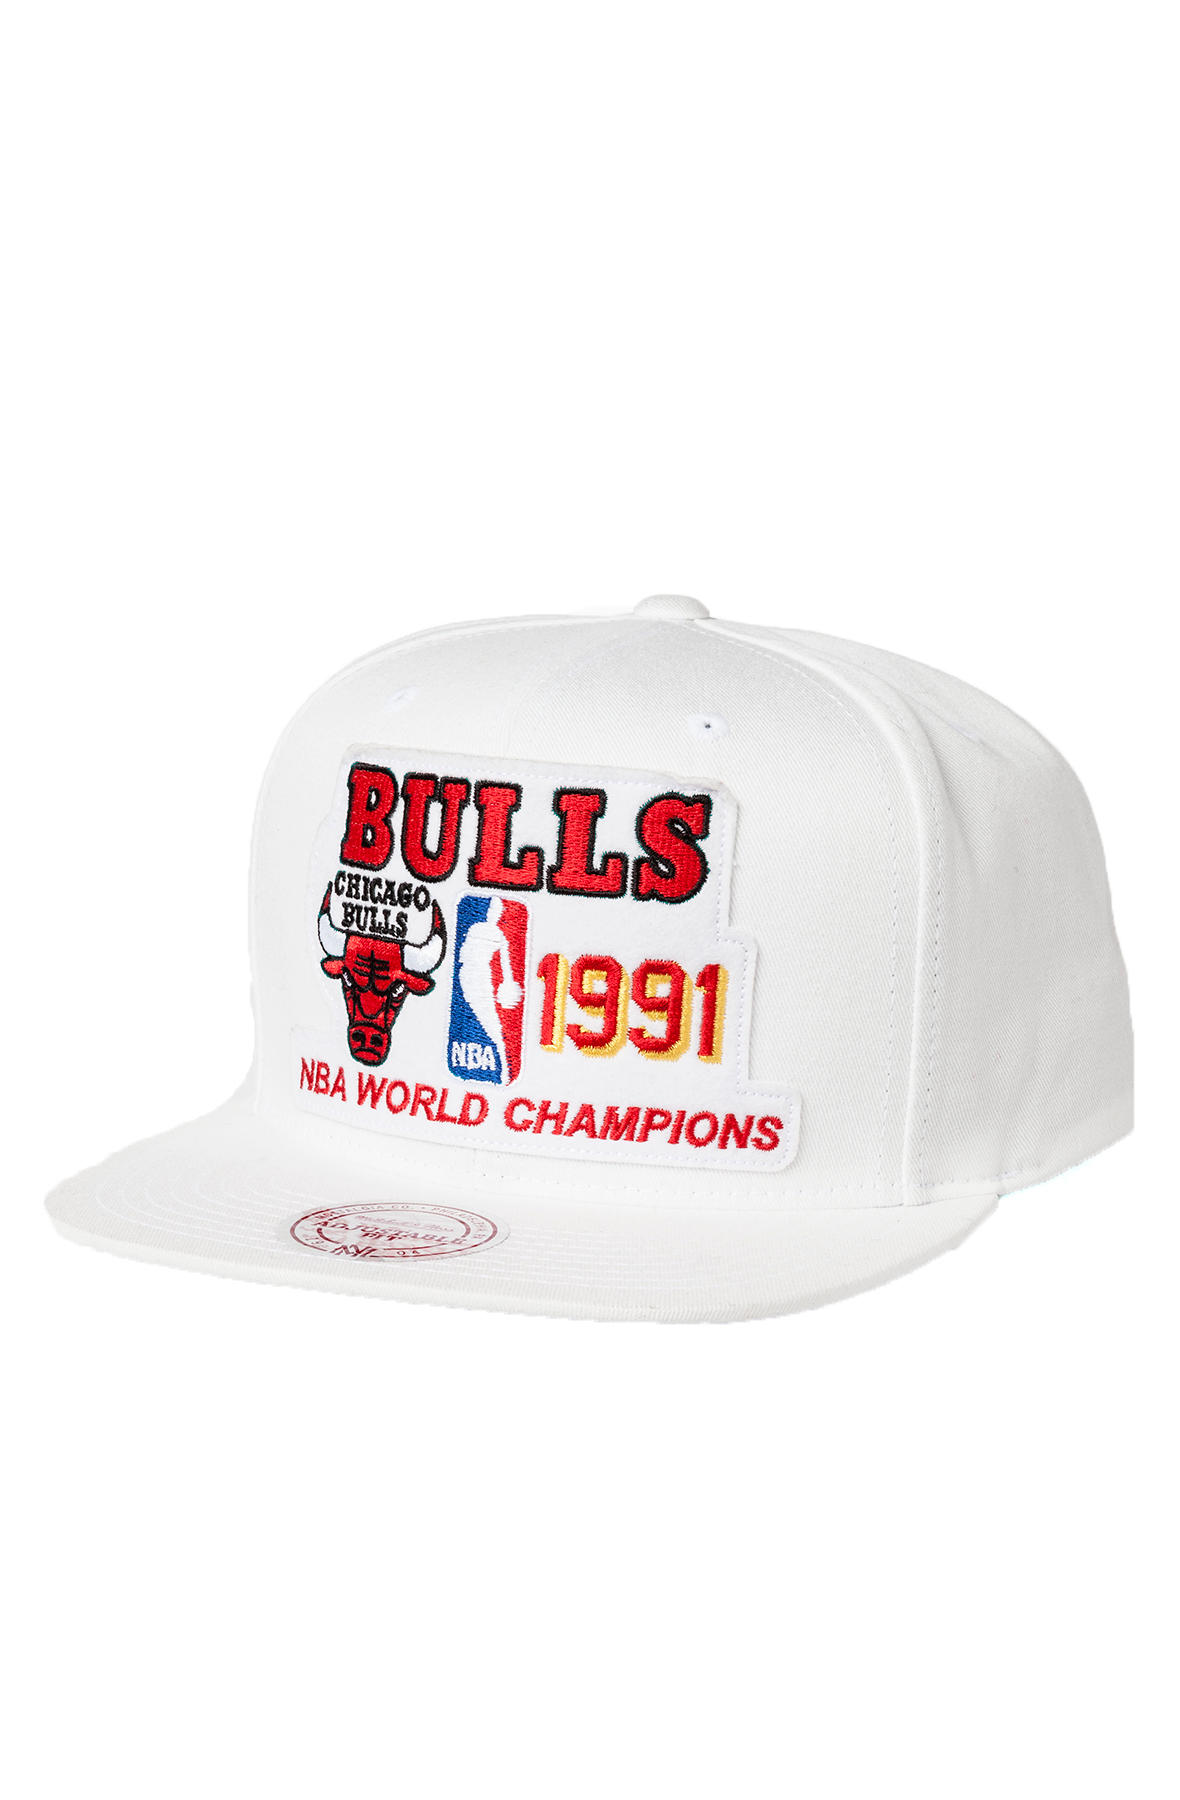 1991 NBA Champions Snapback Hat 